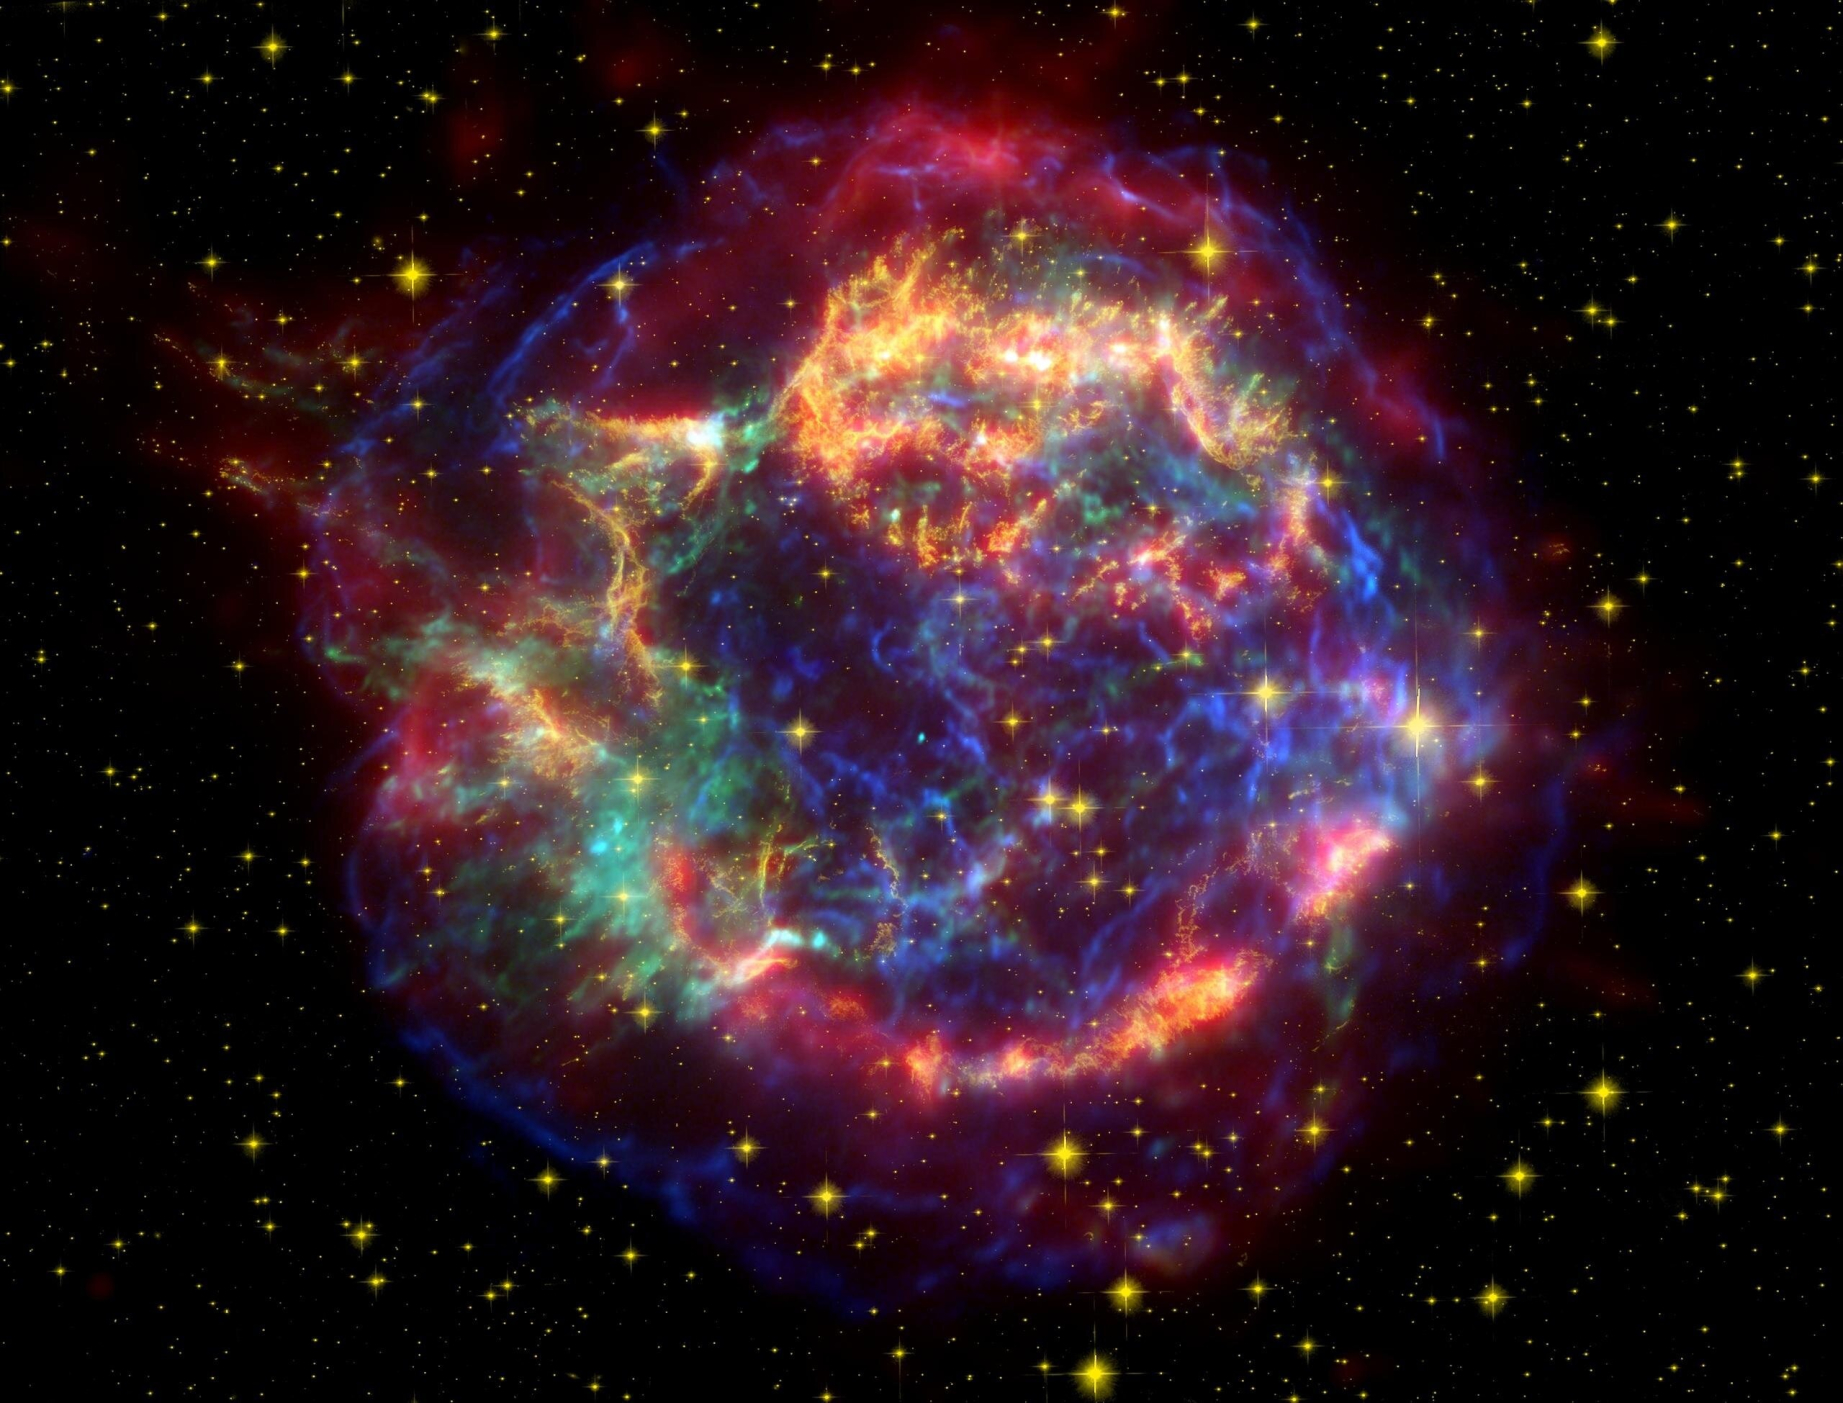 Slika Kasiopeje A u boji temeljena na podatcima svemirskih teleskopa Hubble, Spitzer i Chandra (©NASA/JPL-Caltech).